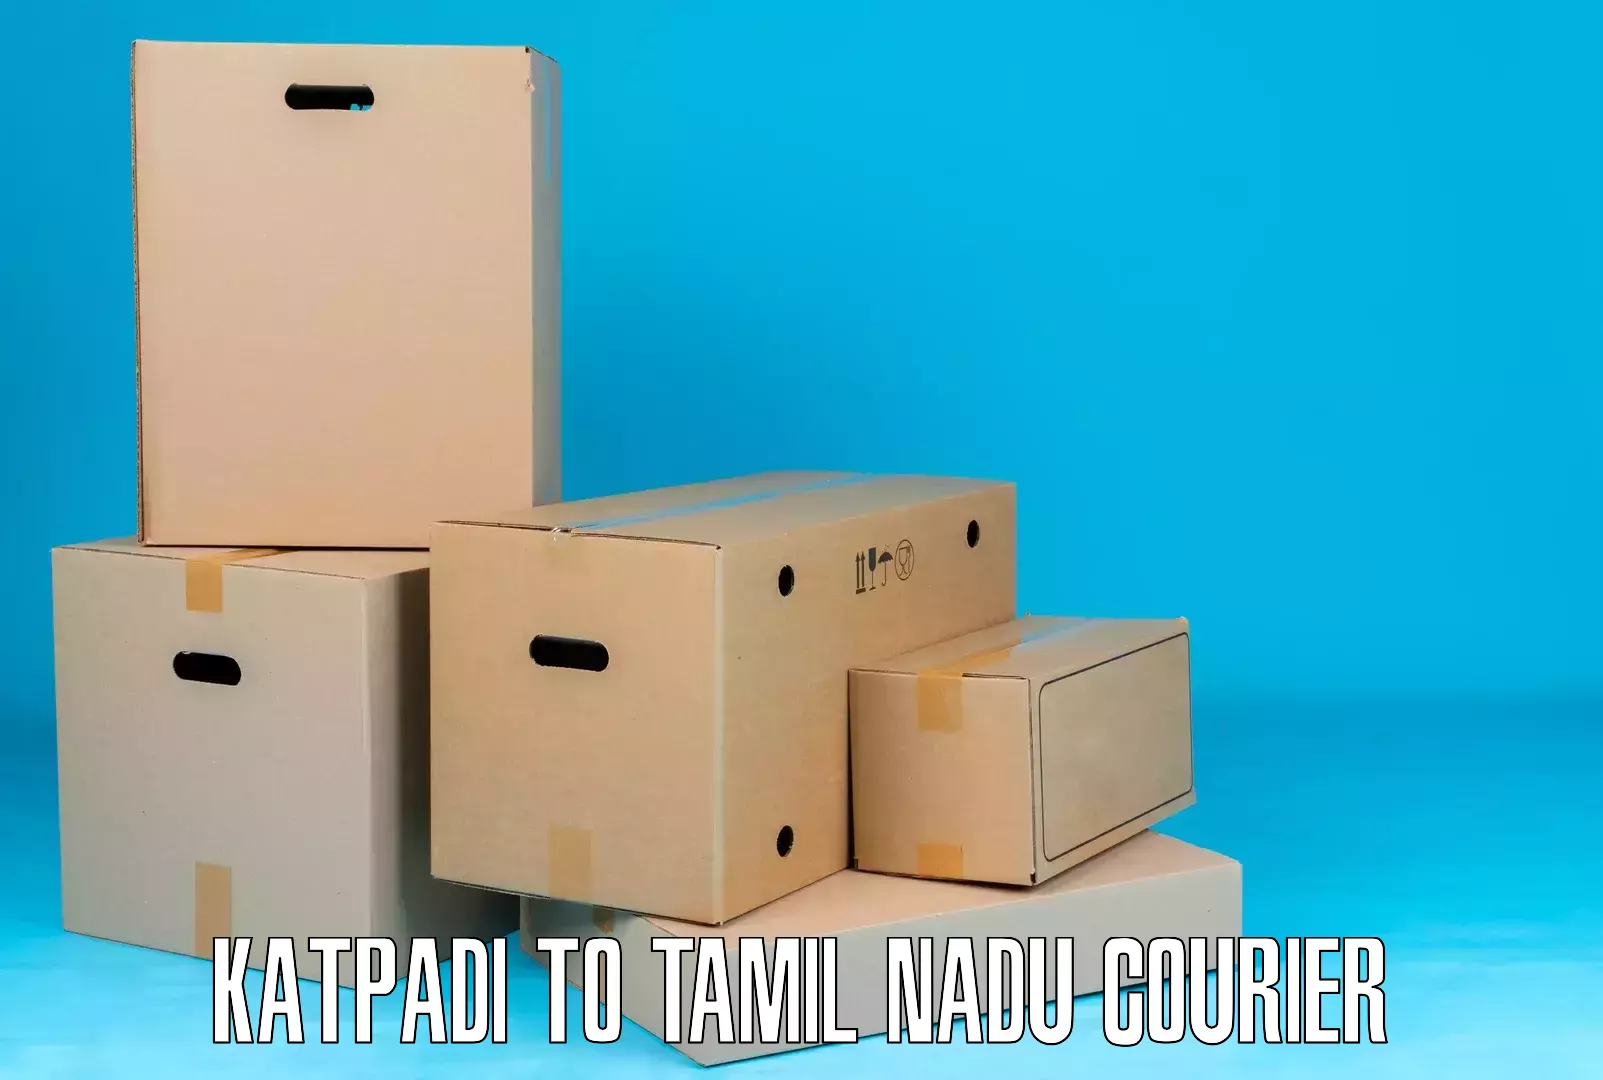 Supply chain efficiency Katpadi to Memalur